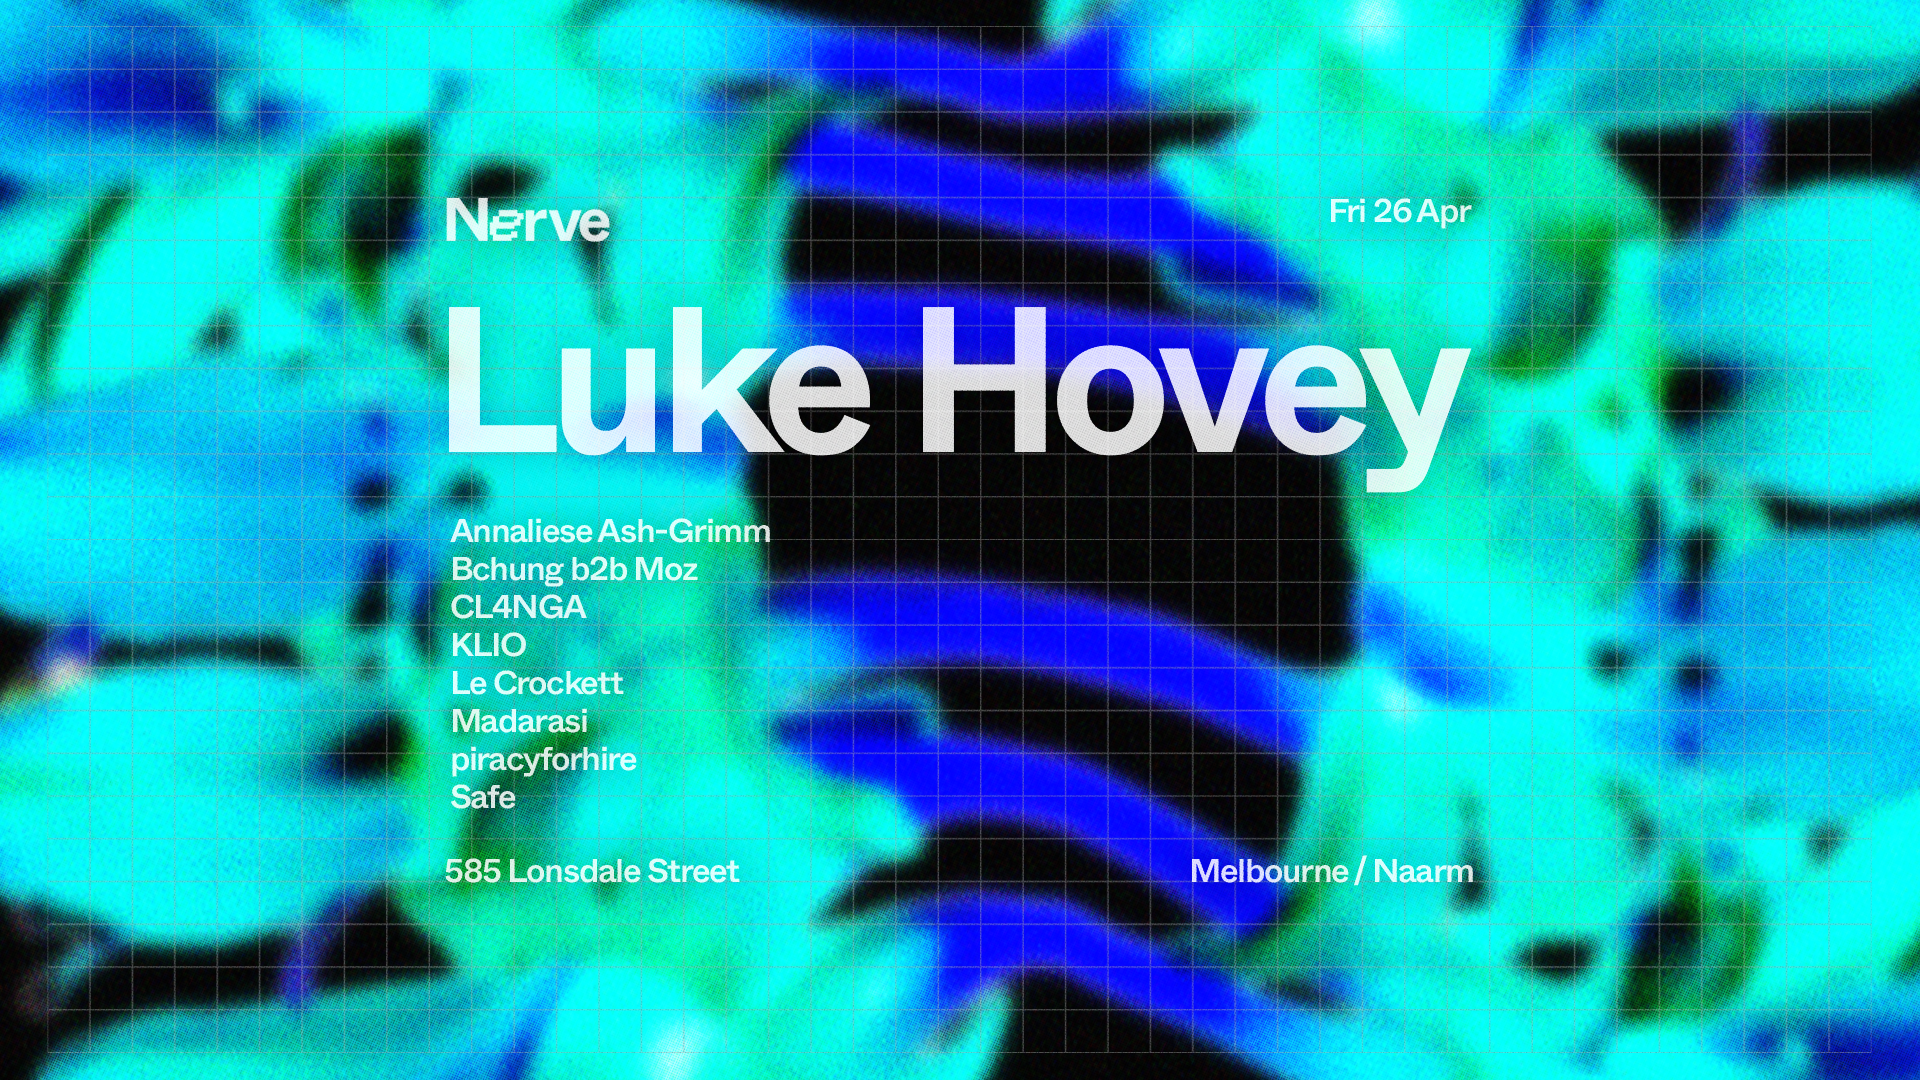 Nerve - Luke Hovey